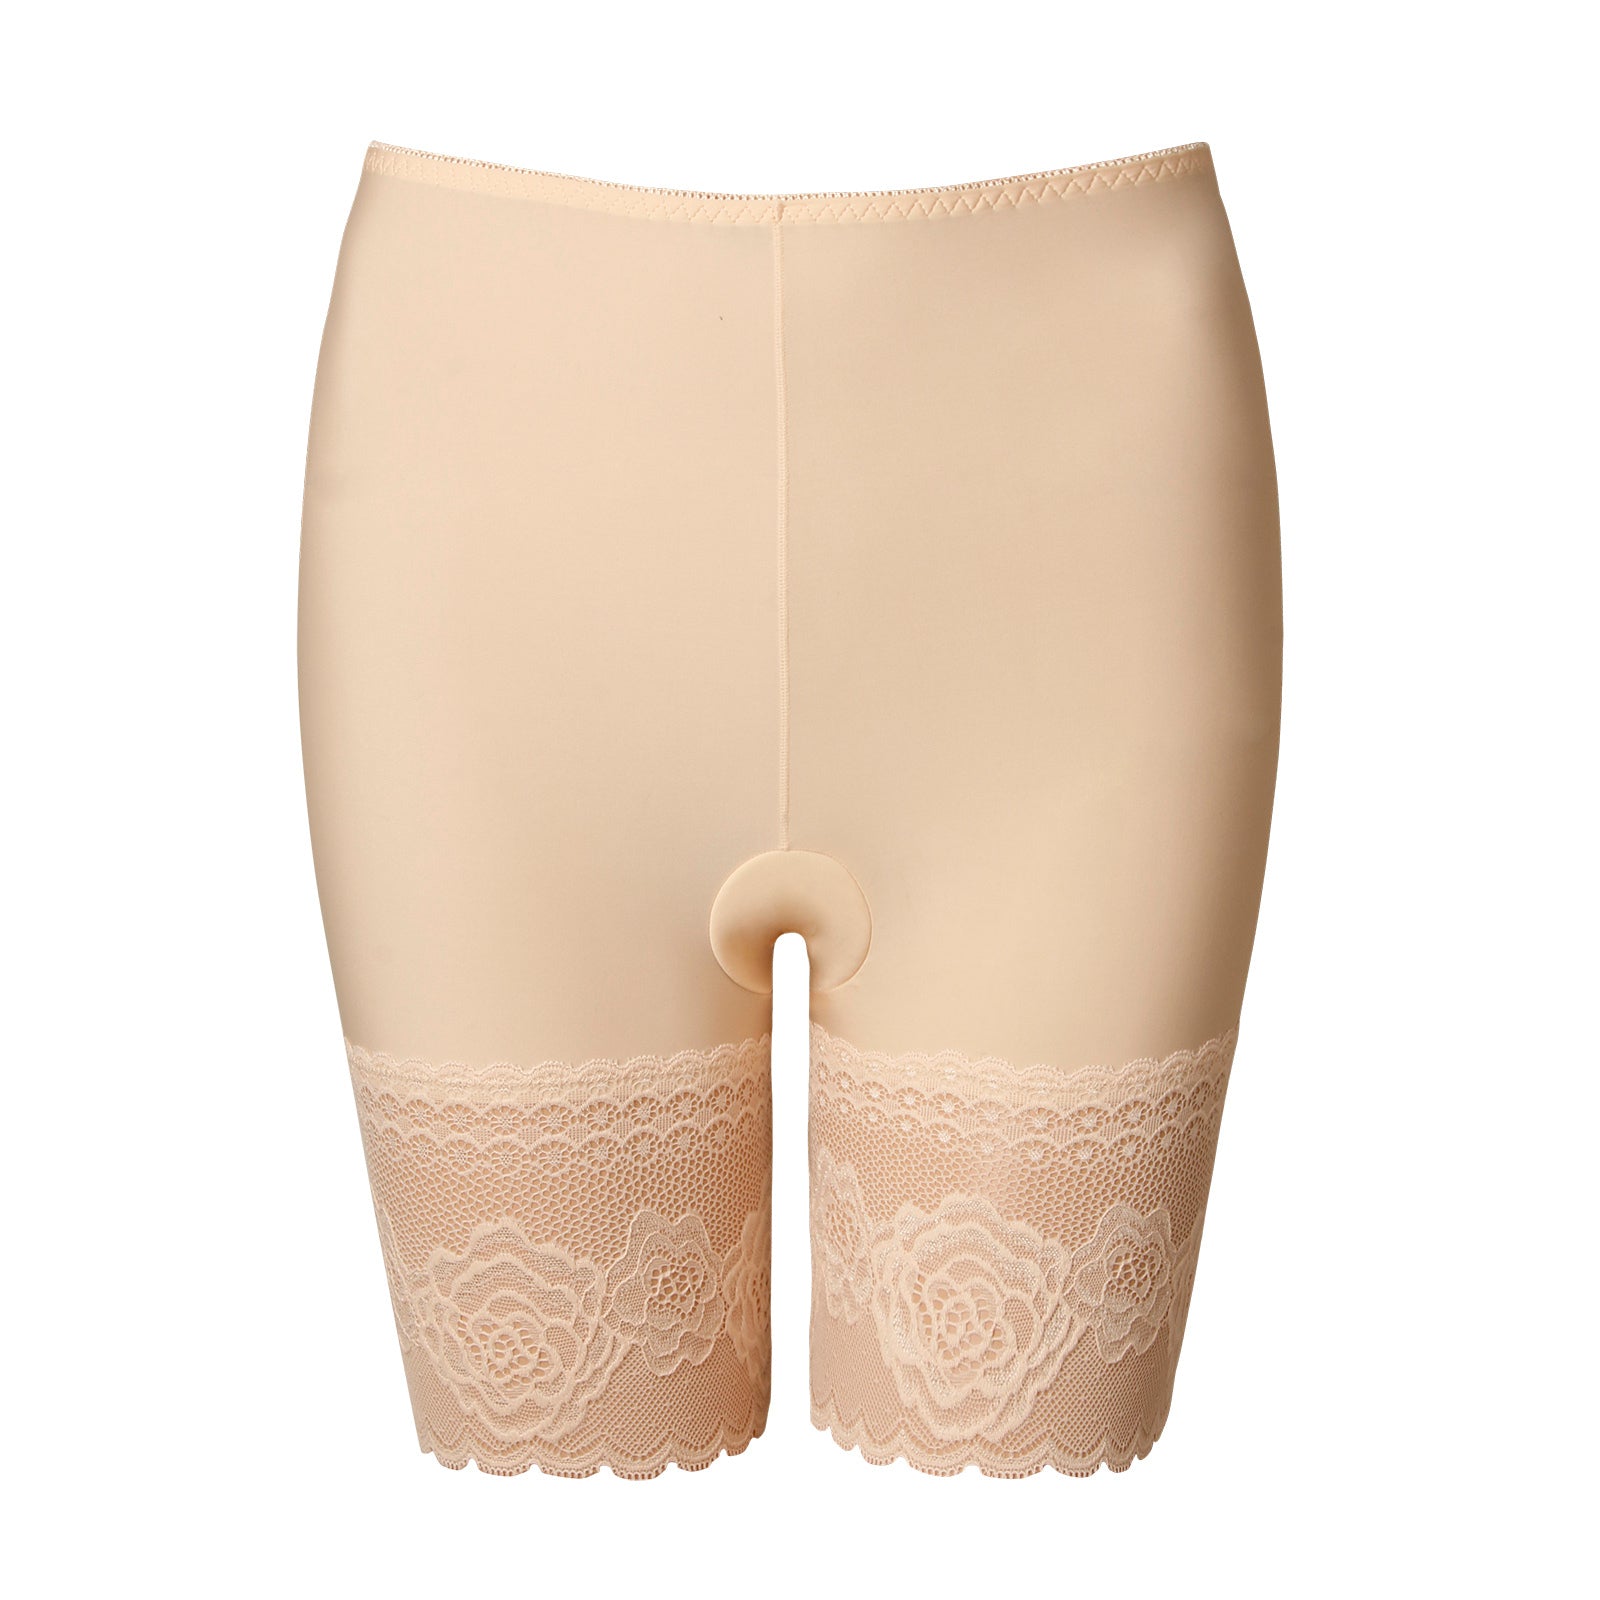 Shapewear Shorts for Women Tummy Control Body Shaper High Waisted Shapewear  Underwear Lace Shaping Boyshorts(A#beige-lace Trim,Small) at  Women's  Clothing store